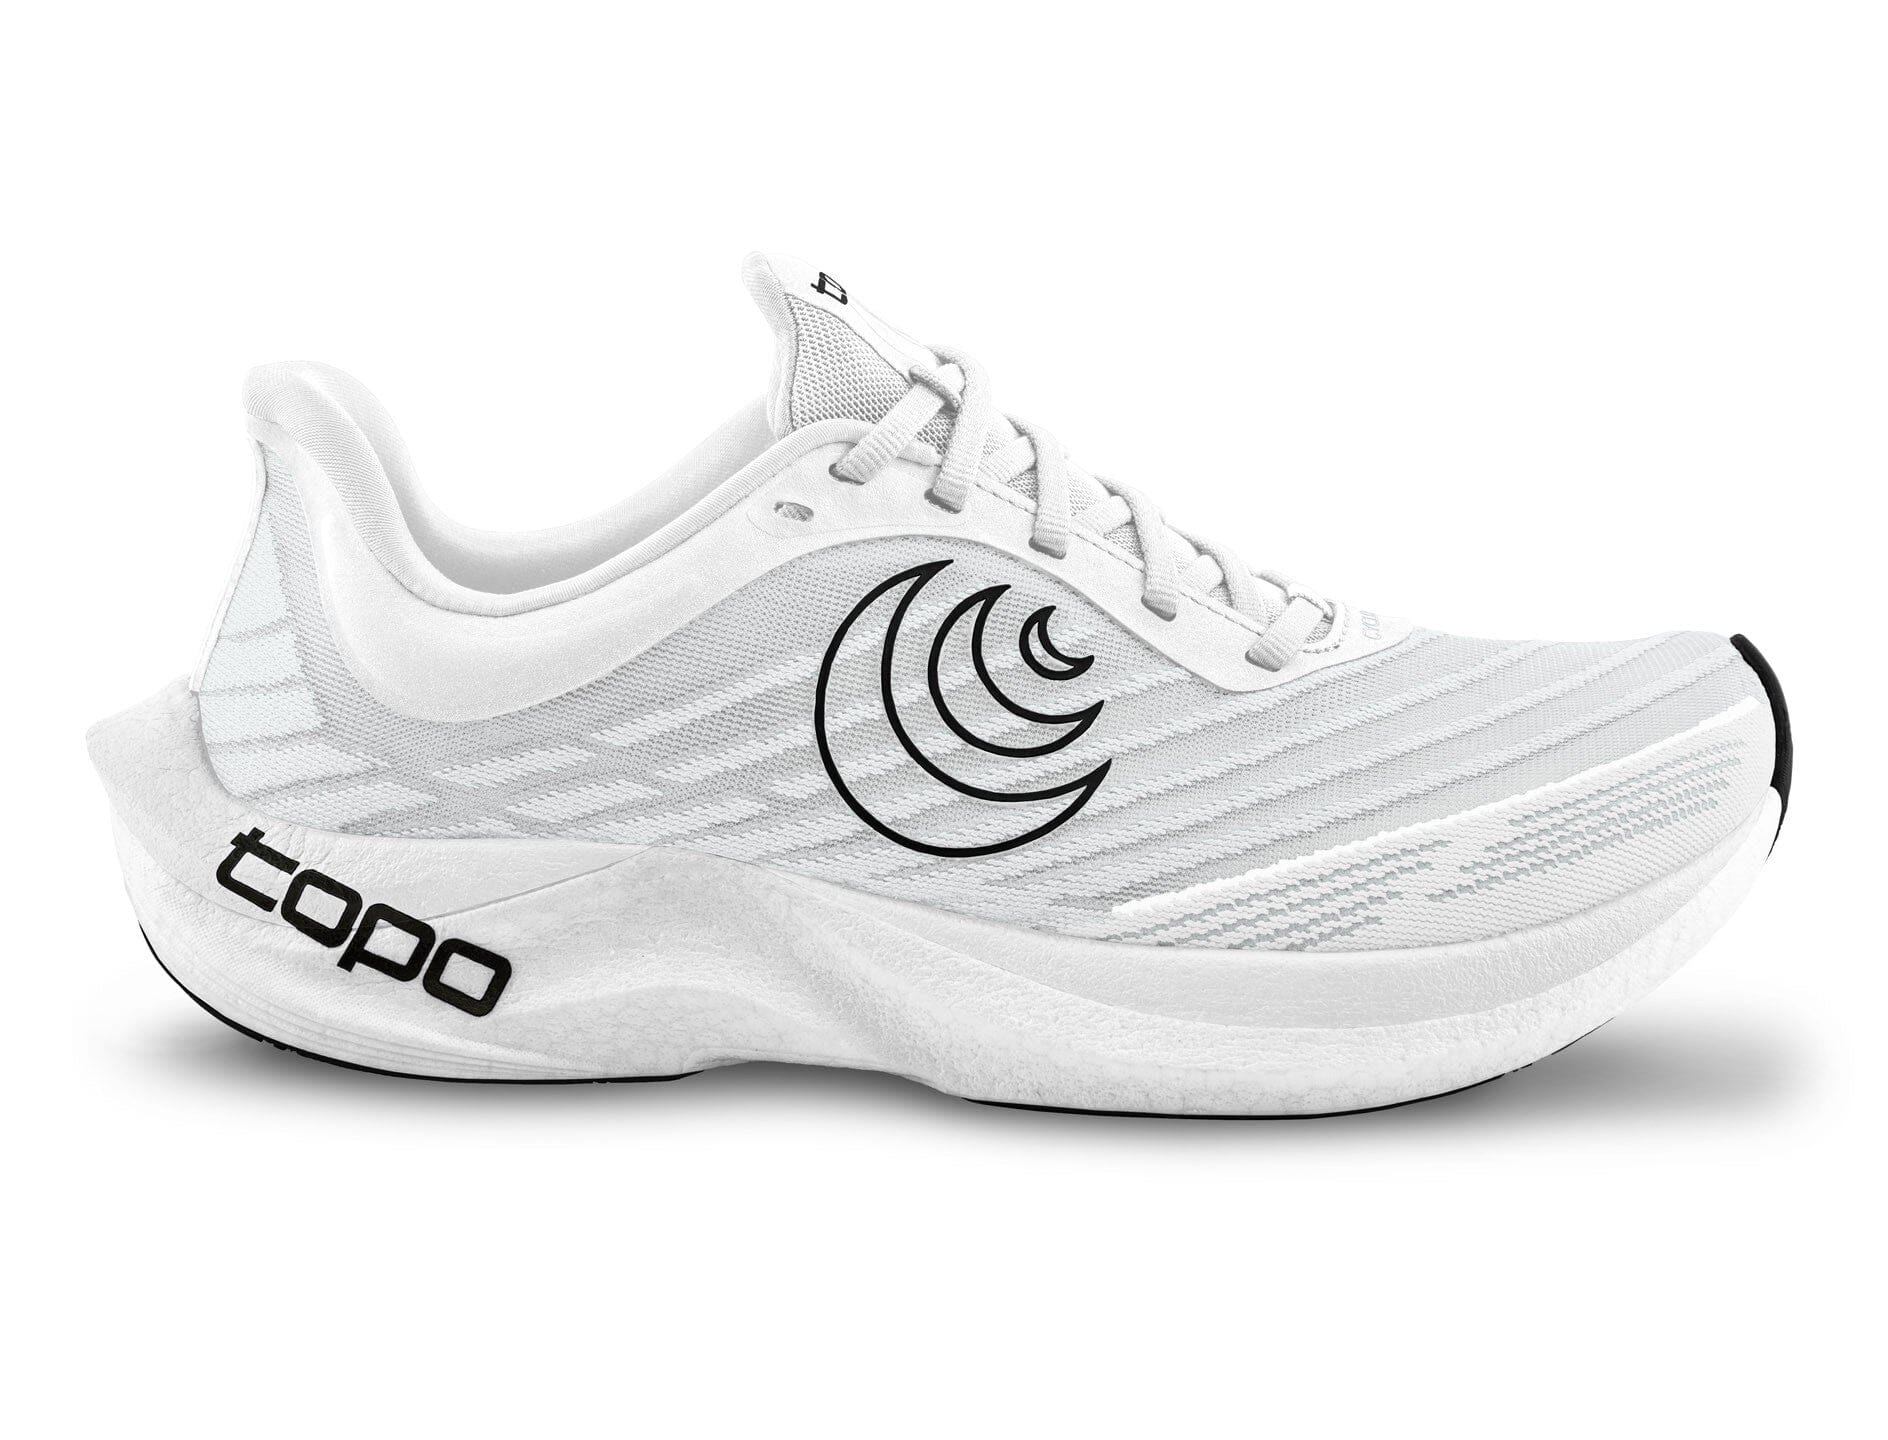 Topo Women's Cyclone 2 Road Running Shoes White/Black US 6.5 